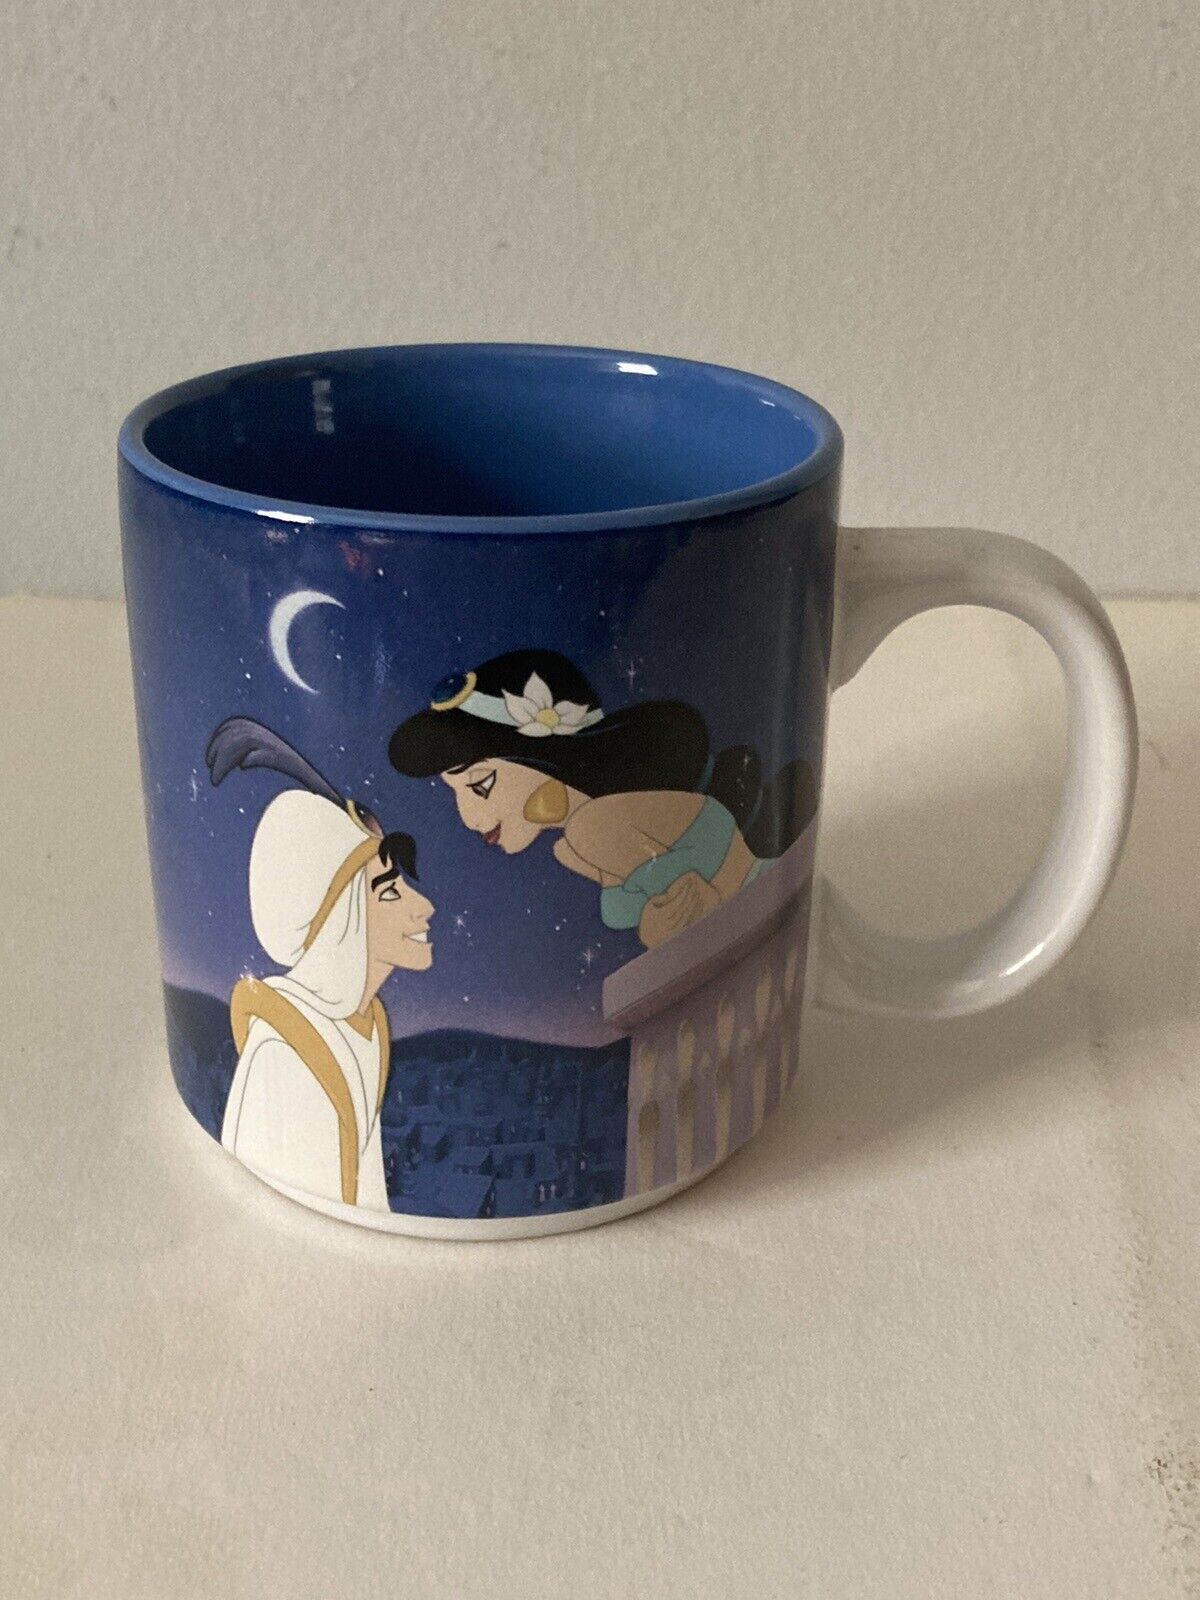 1990 Vintage Aladdin Mug With Jasmine and Genie The Disney Store Collector. NIB